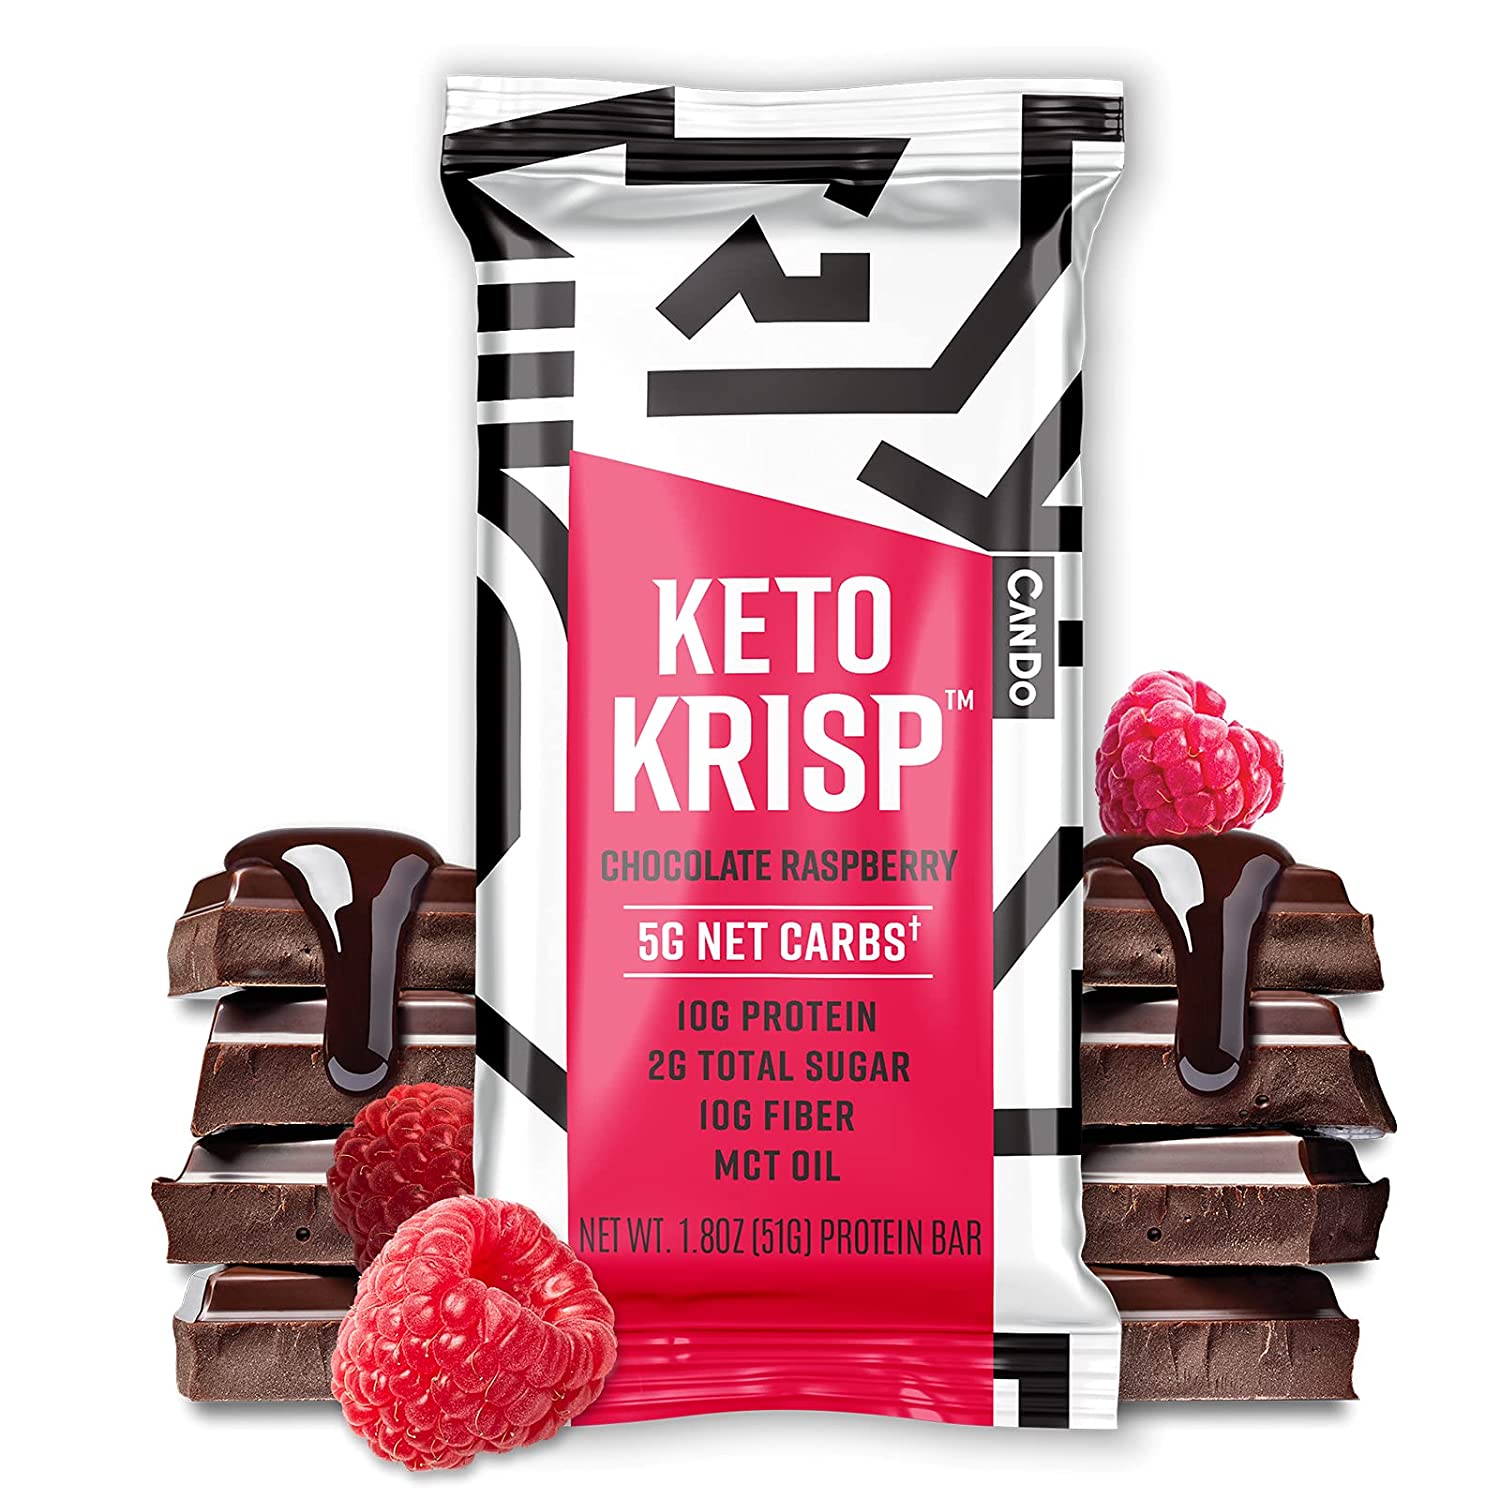 Keto Krisp Chocolate Raspberry (Pack of 12)